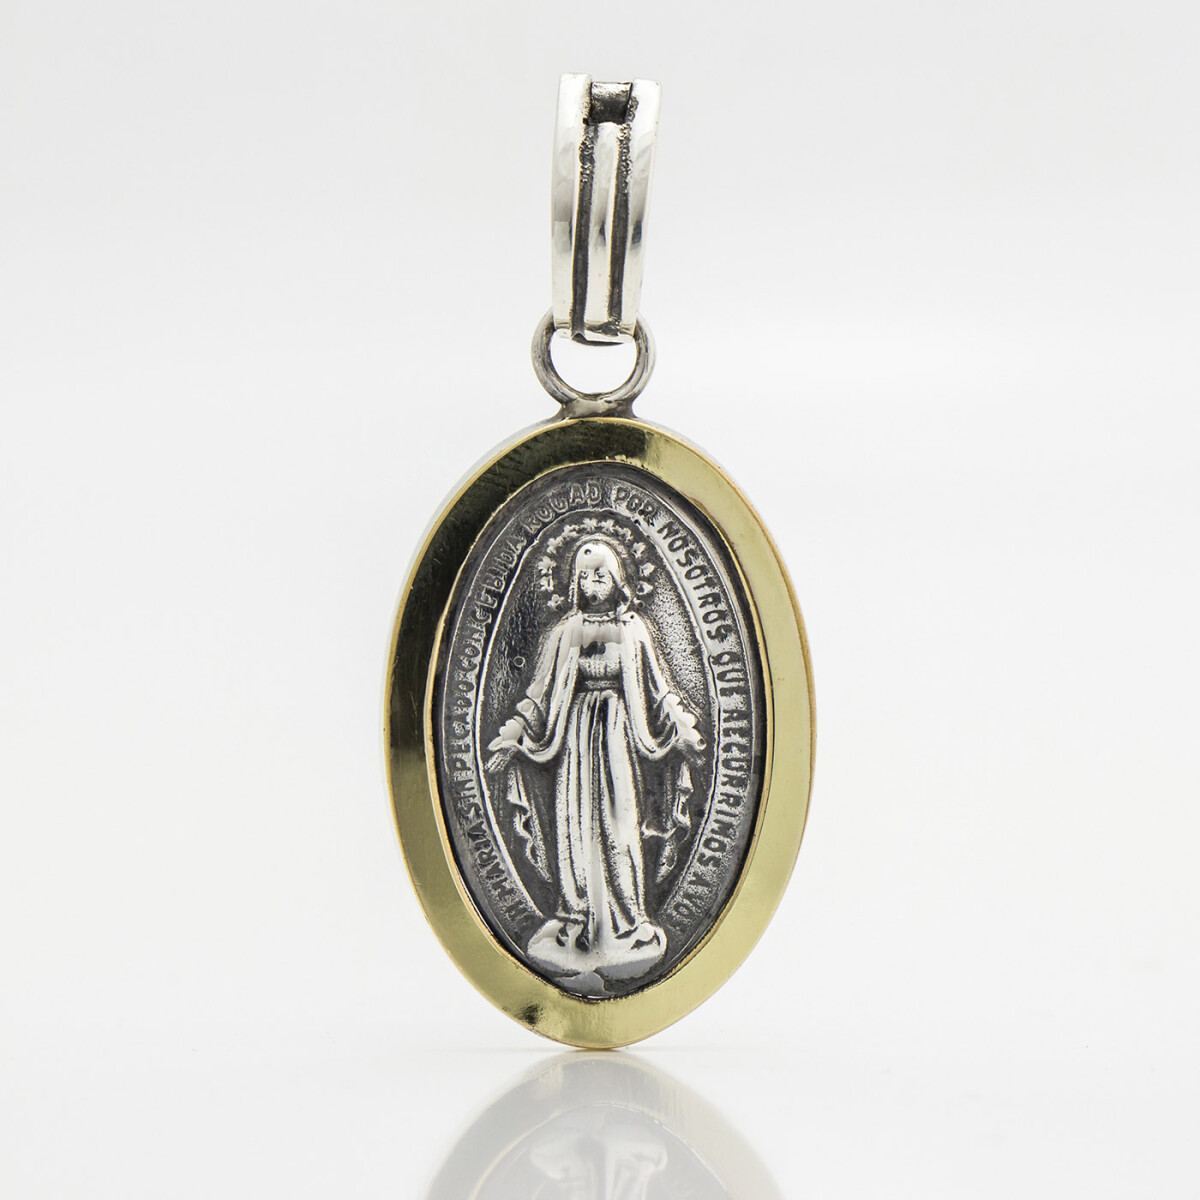 Medalla religiosa virgen milagrosa de plata 900 con borde en double de oro 18k., 3.2cm*2.2cm. 